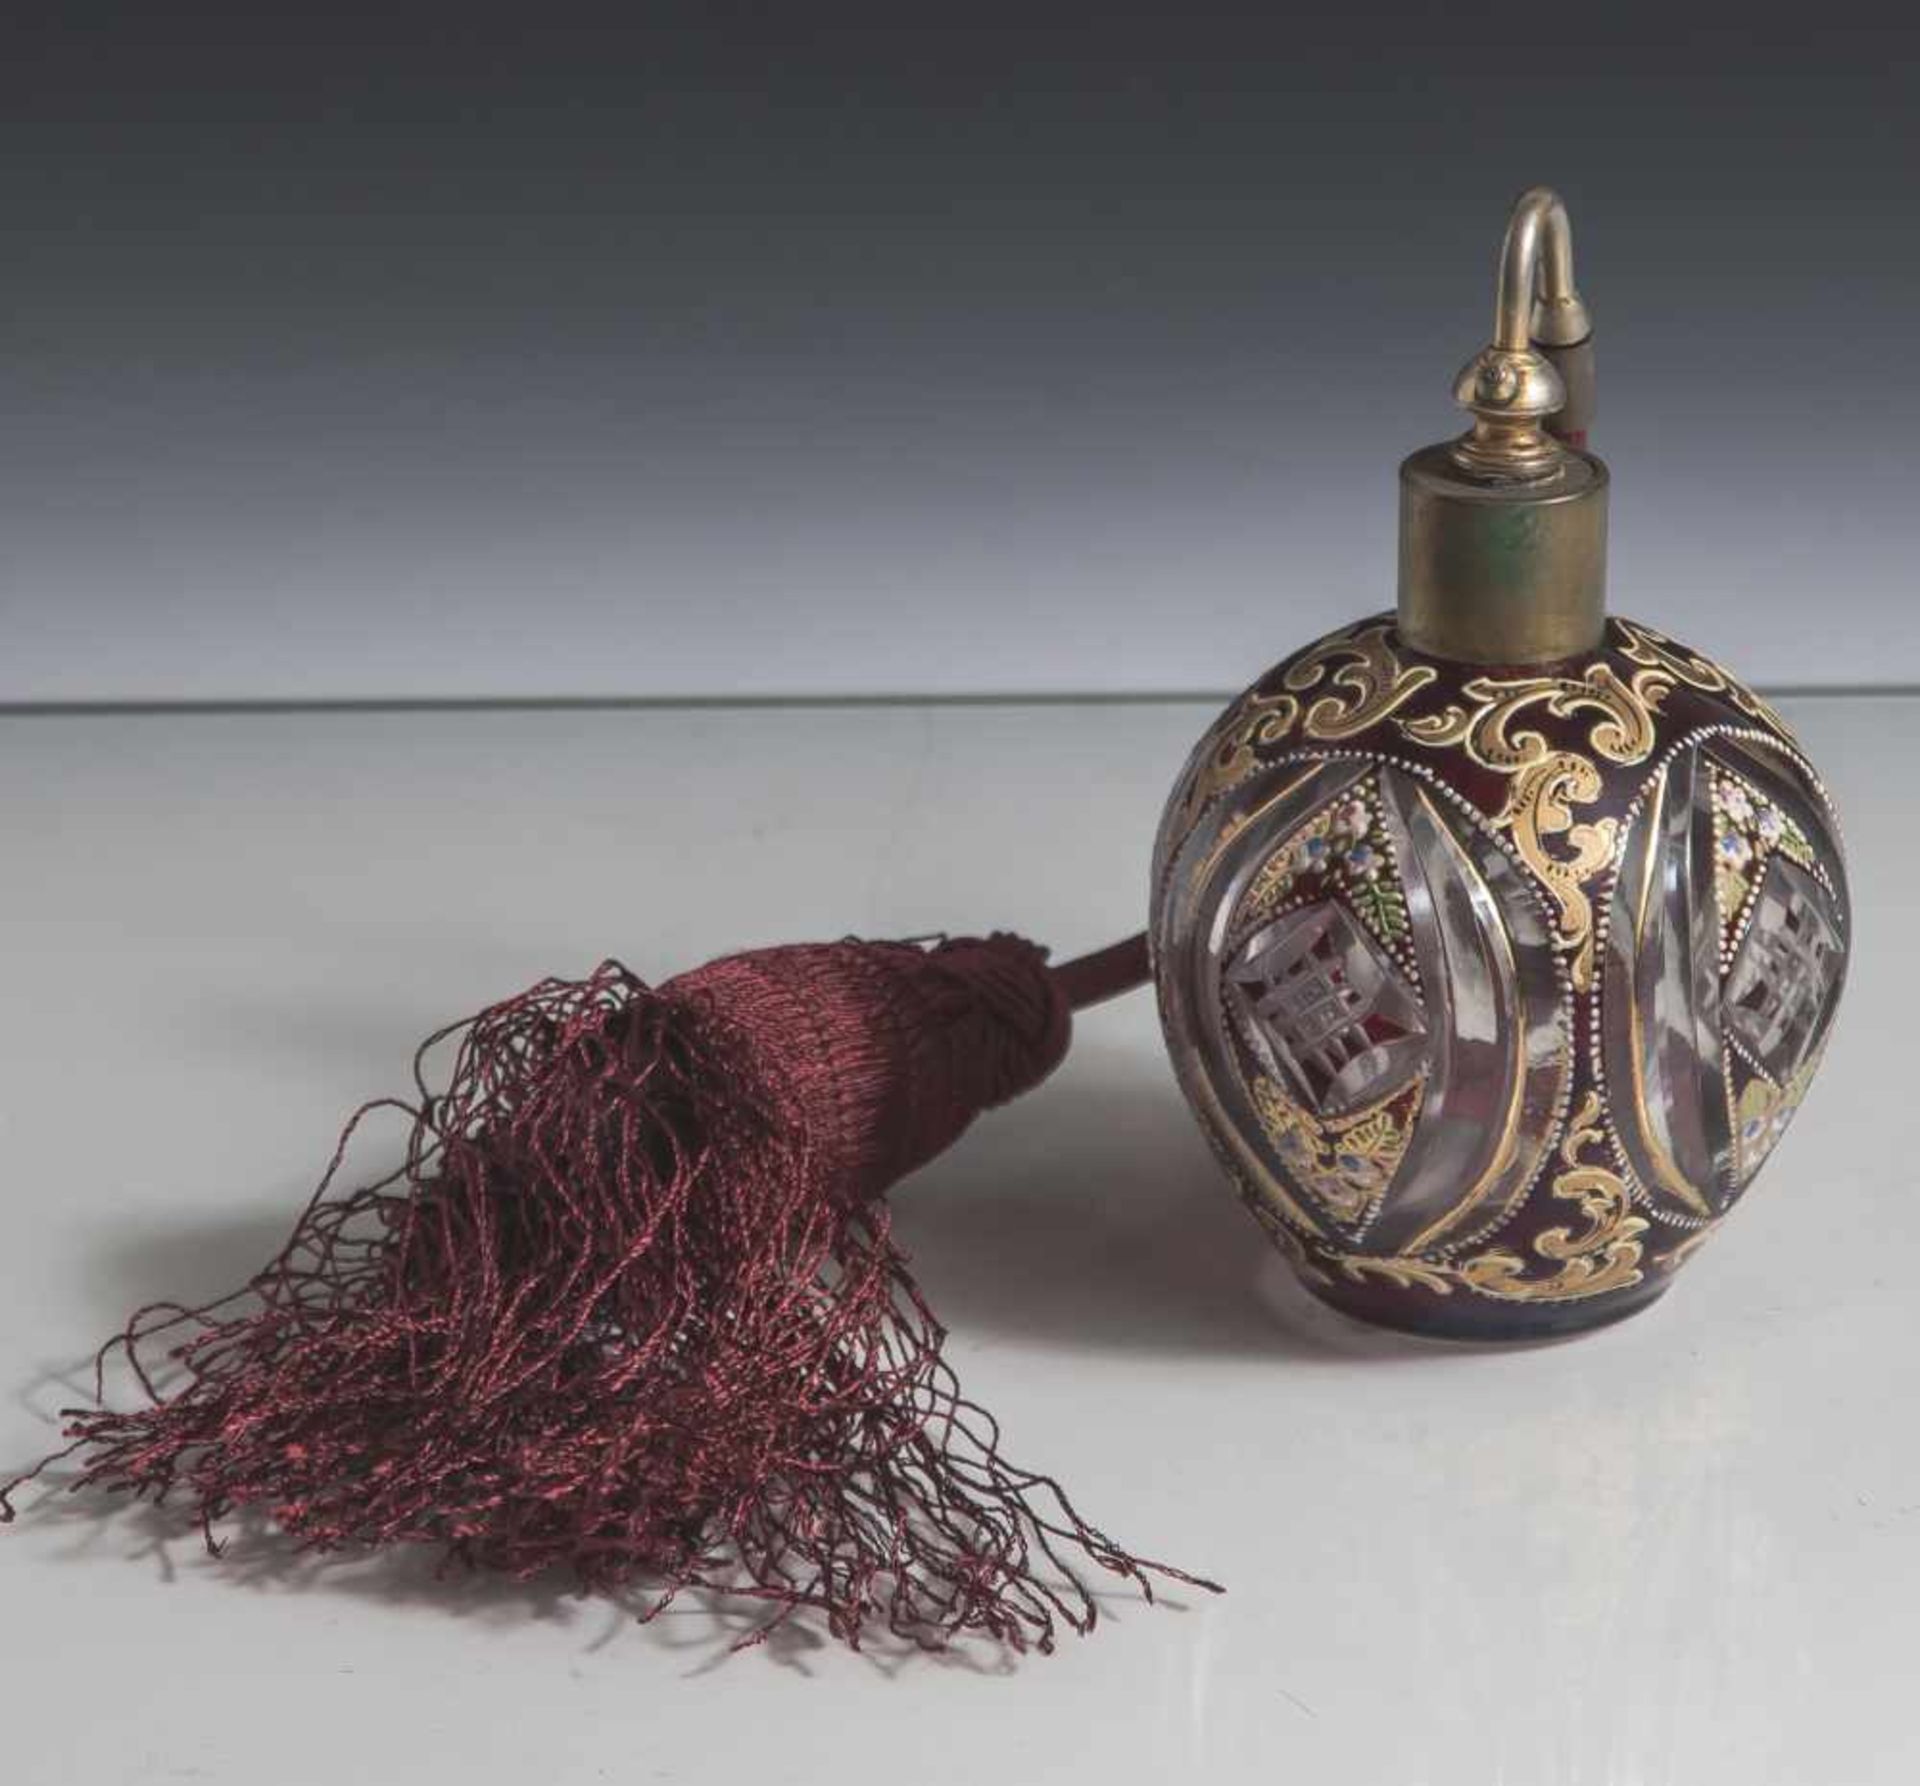 Parfumzerstäuber, Böhmen, Ende 19. Jahrhundert, kugeliger Korpus aus farblosem, facette-